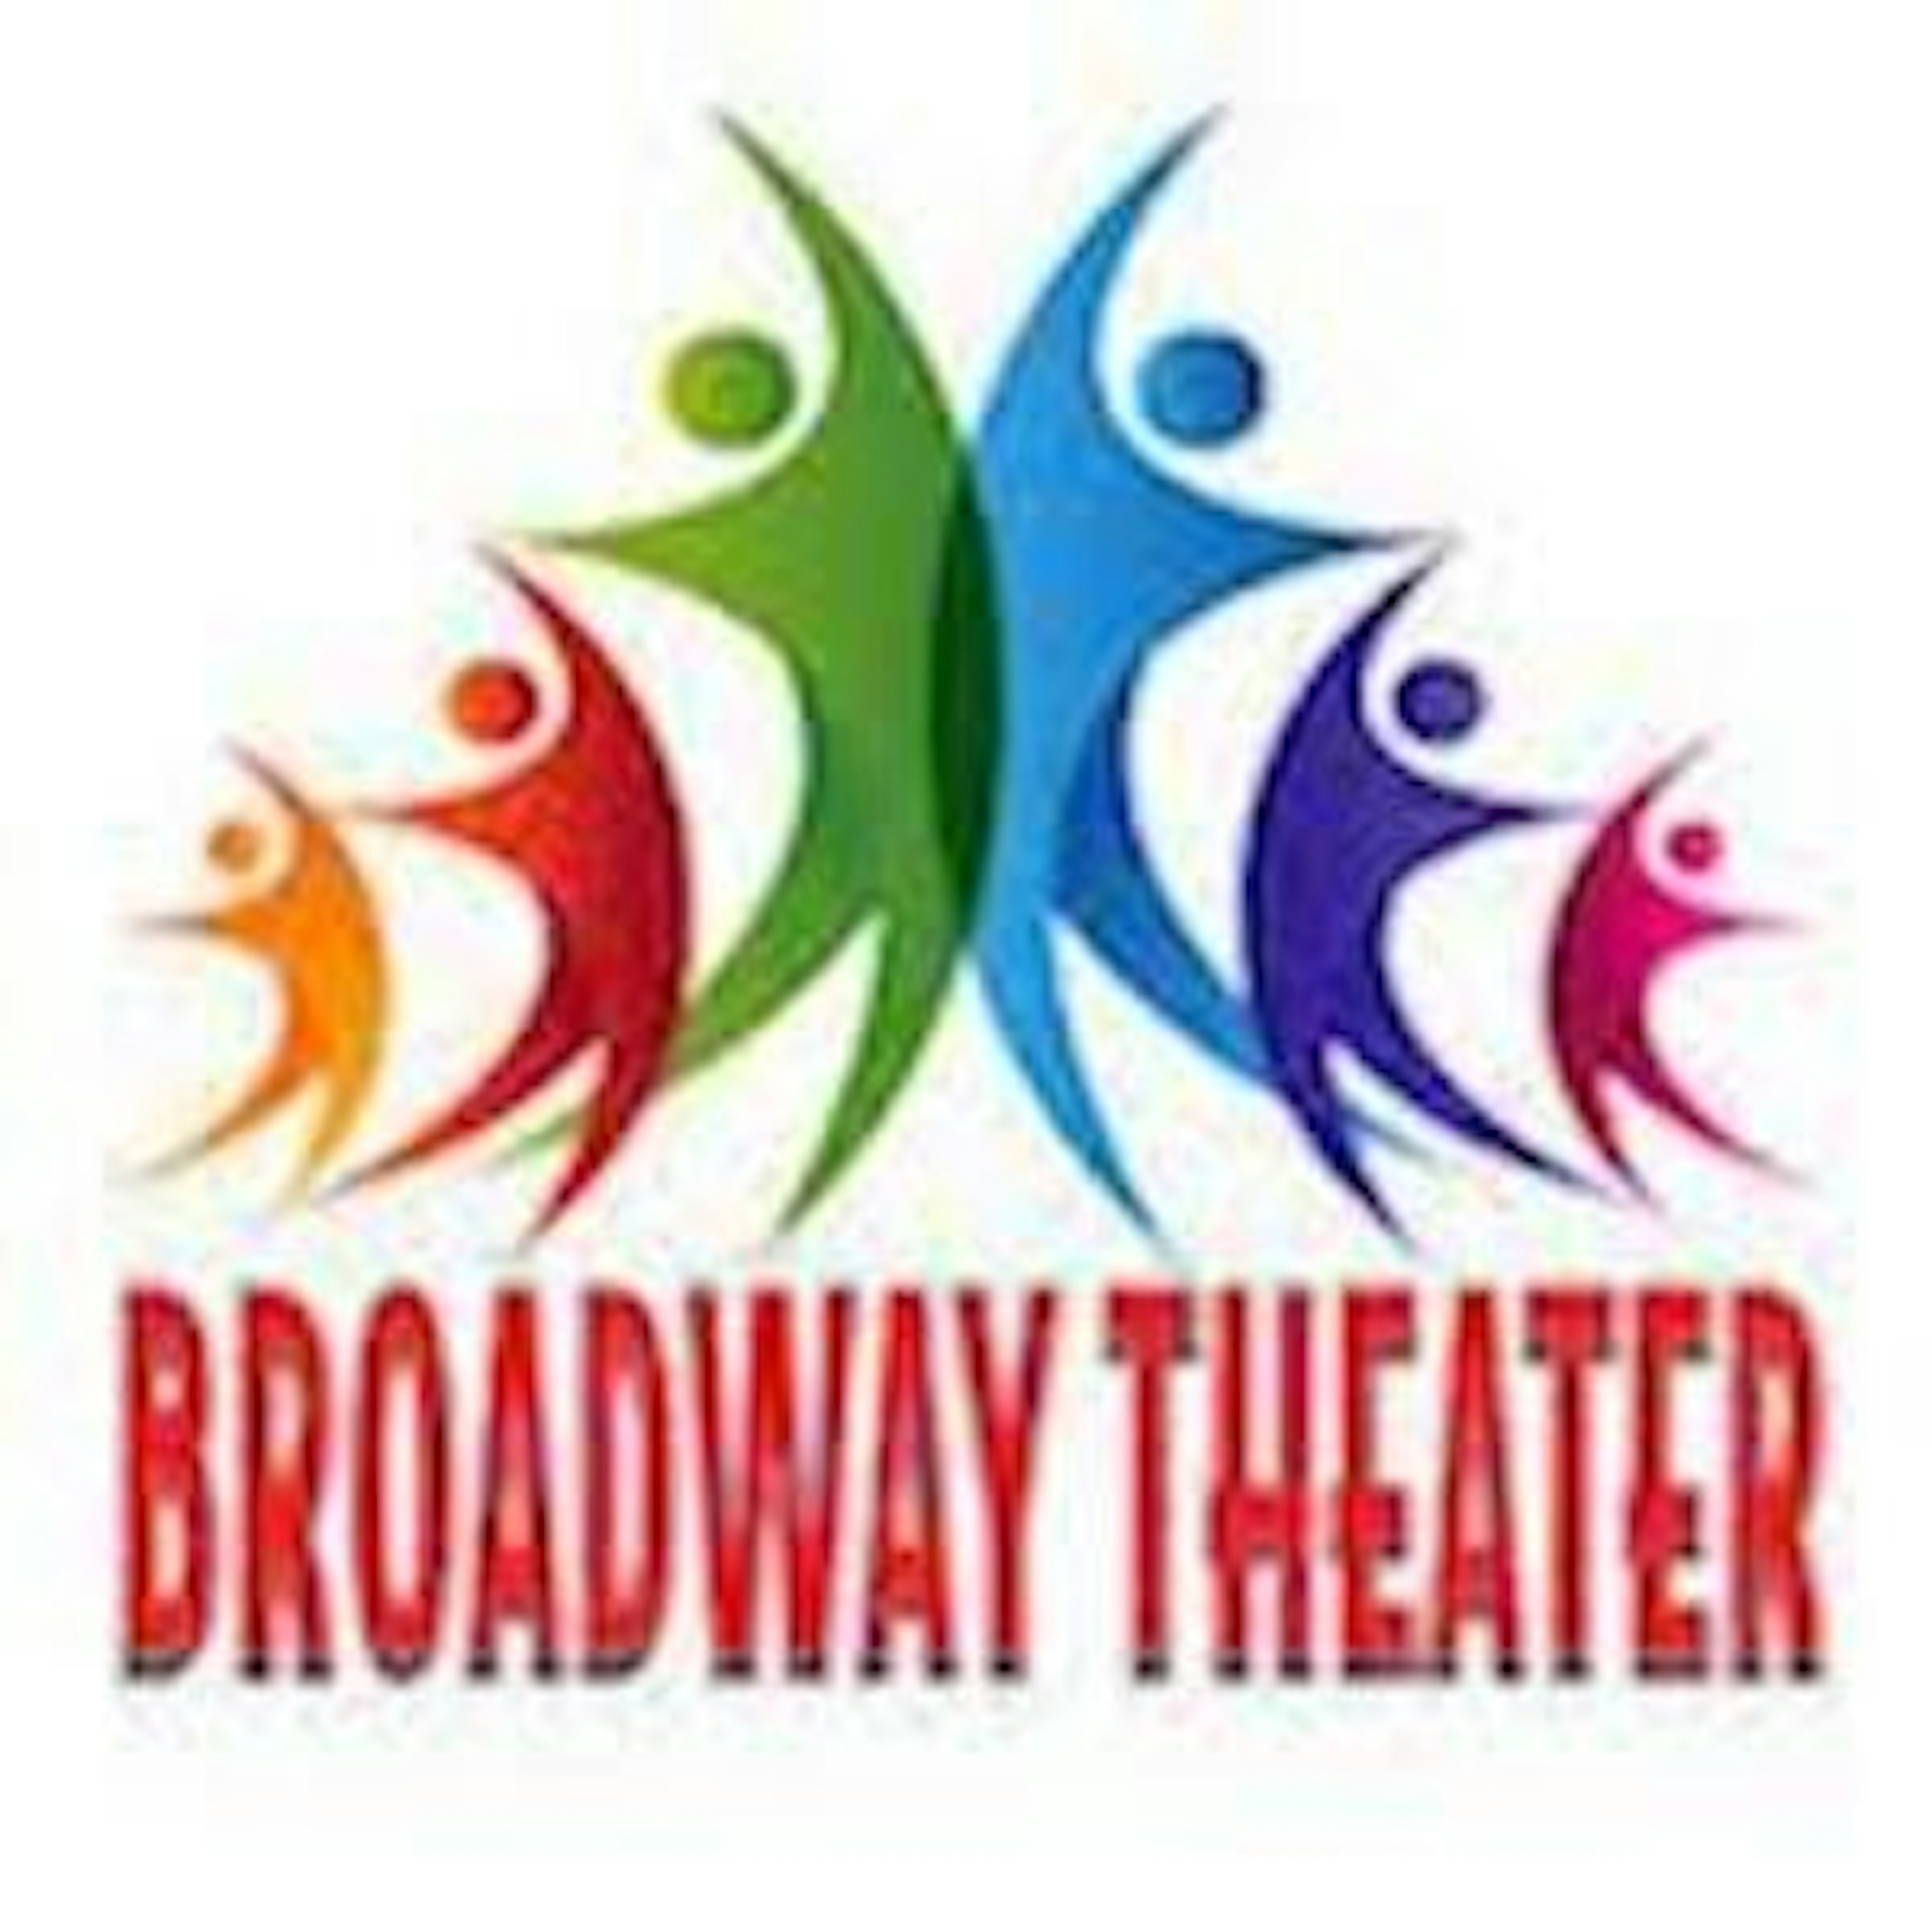 Broadway Theater & Le Grand Cirque